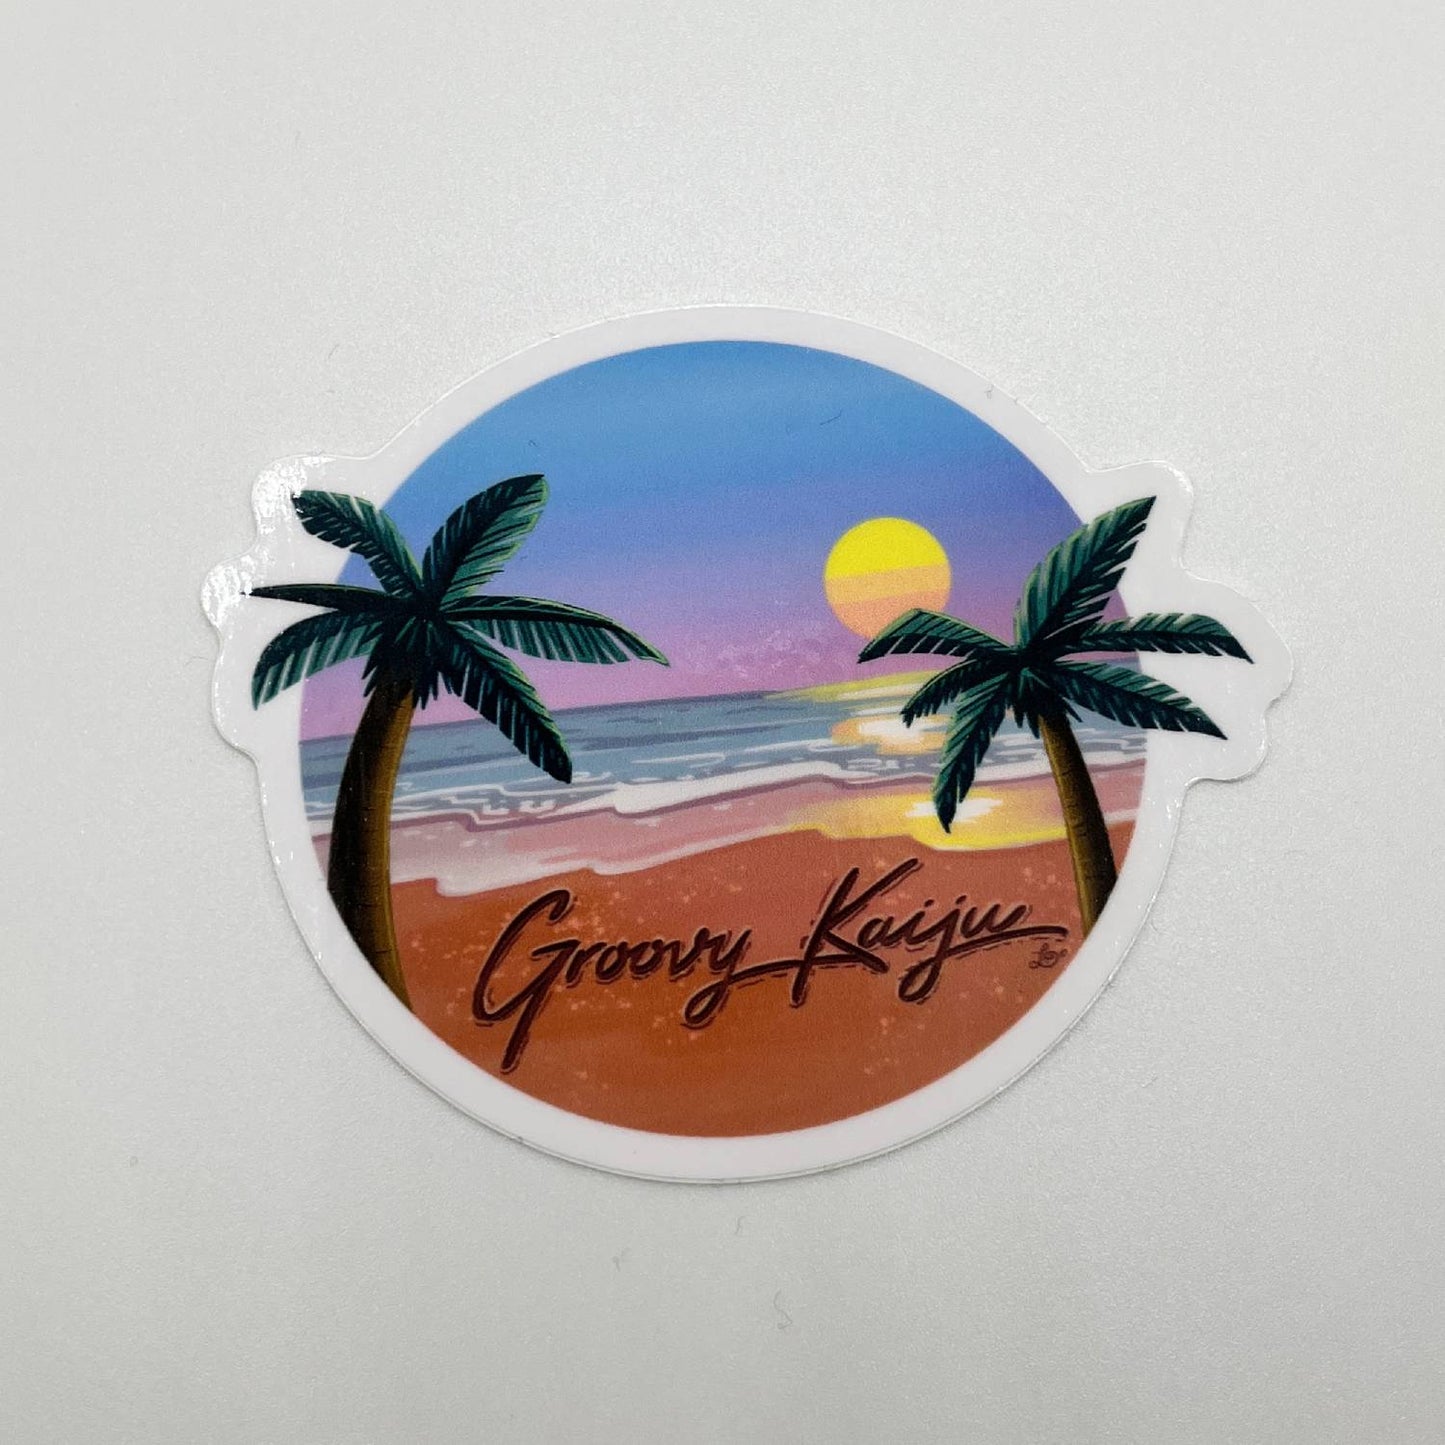 Groovy Kaiju - Kaiju Beach Sticker